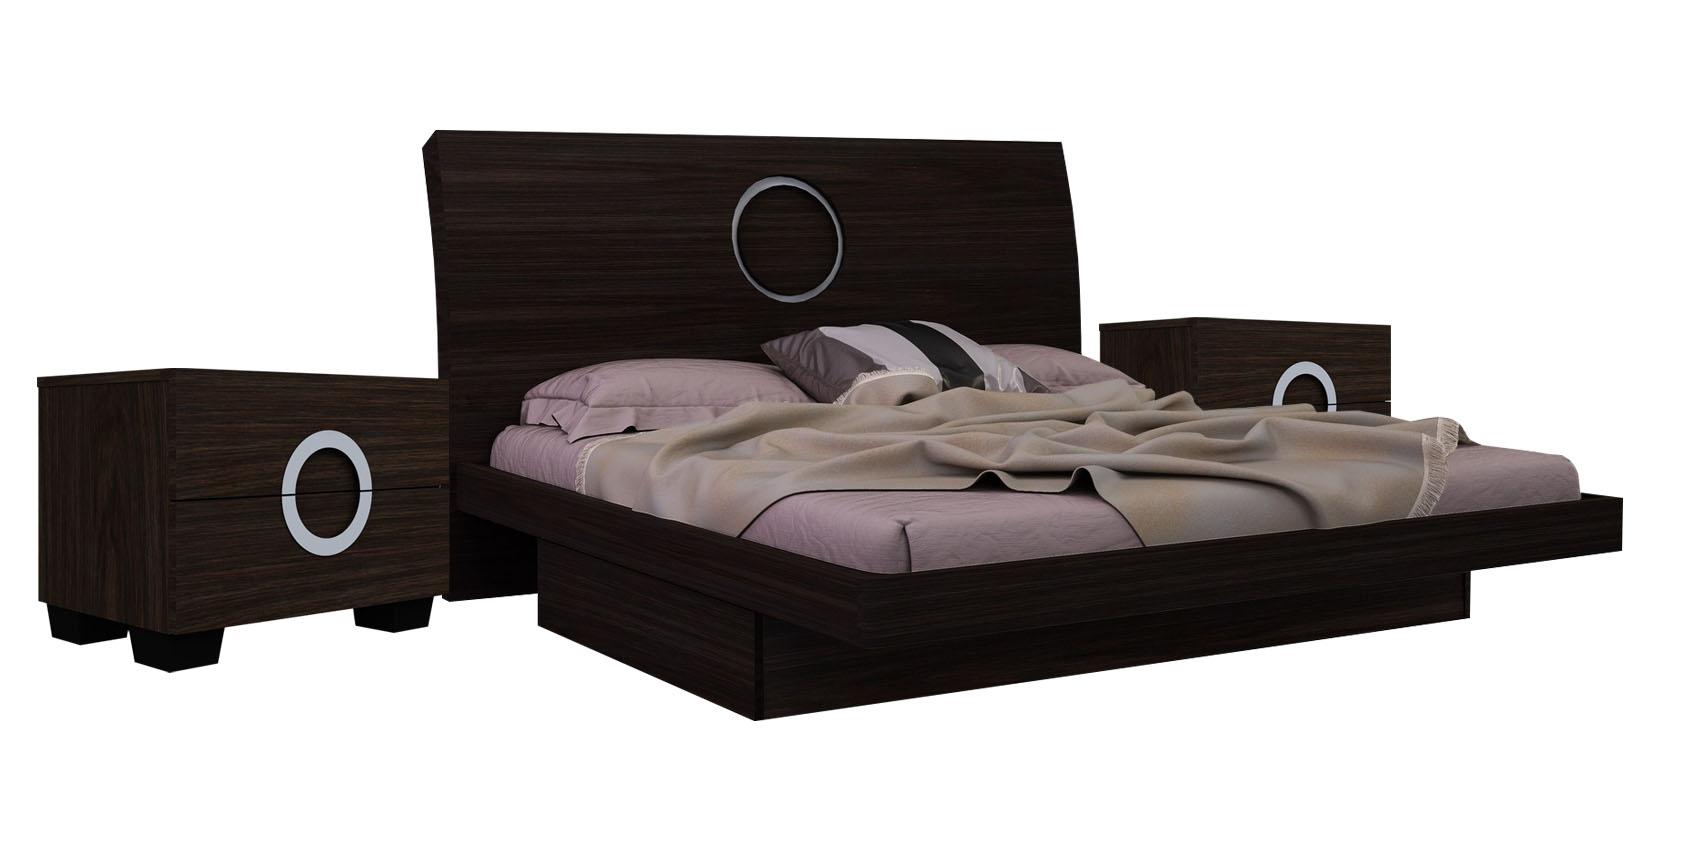 Contemporary, Modern Platform Bedroom Set Monte Carlo MONTE-SET-WENGE-Q-3-PC in Wenge Lacquer